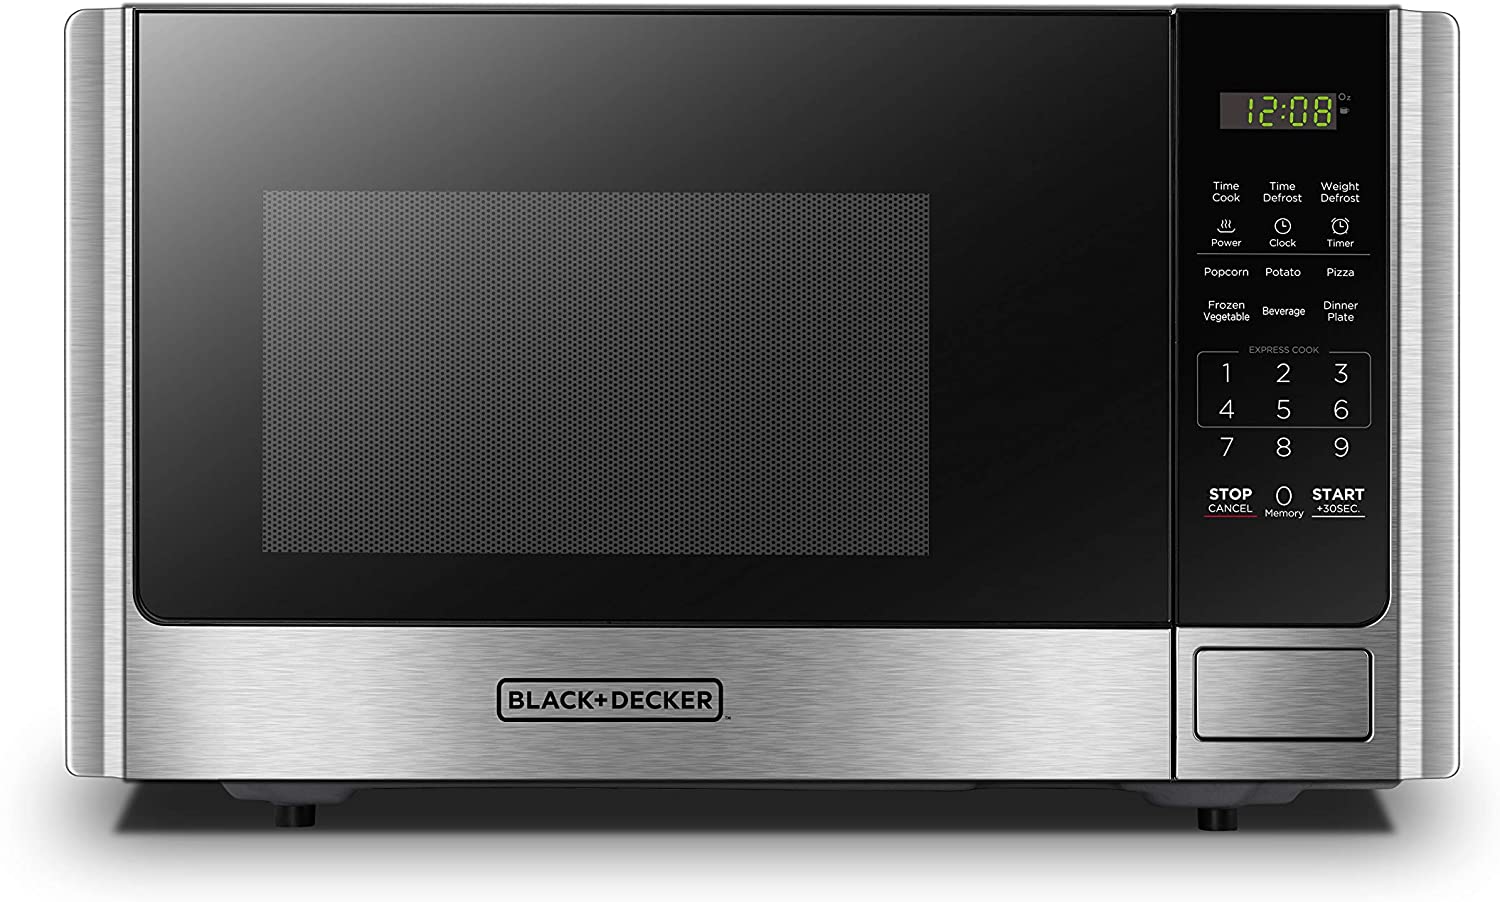 BLACK+DECKER Turntable Digital Portable Microwave Oven, 900-Watt